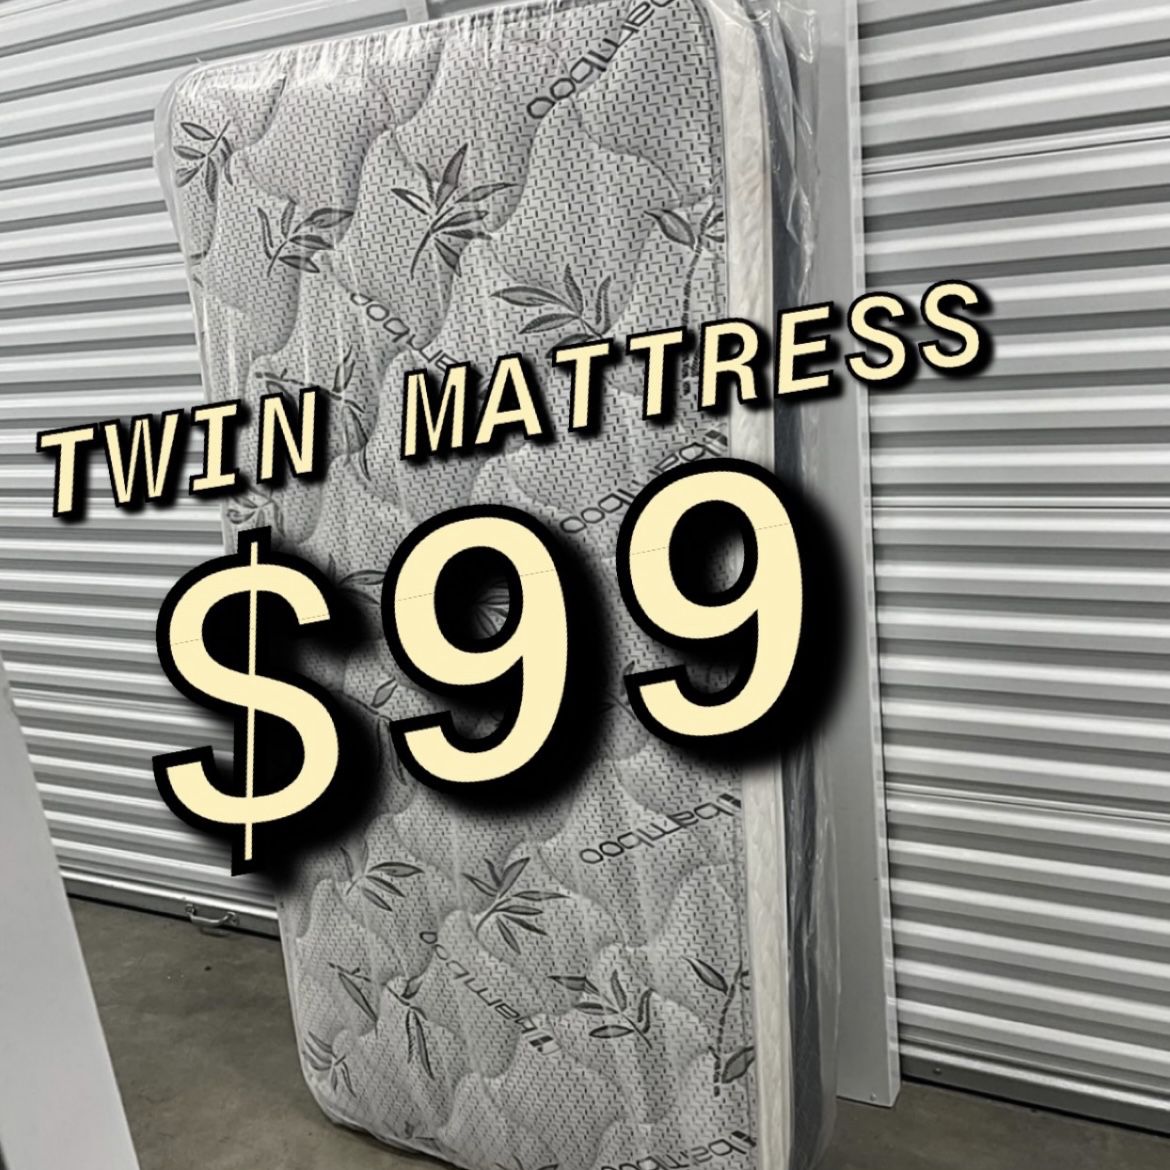 Twin Mattress For $100